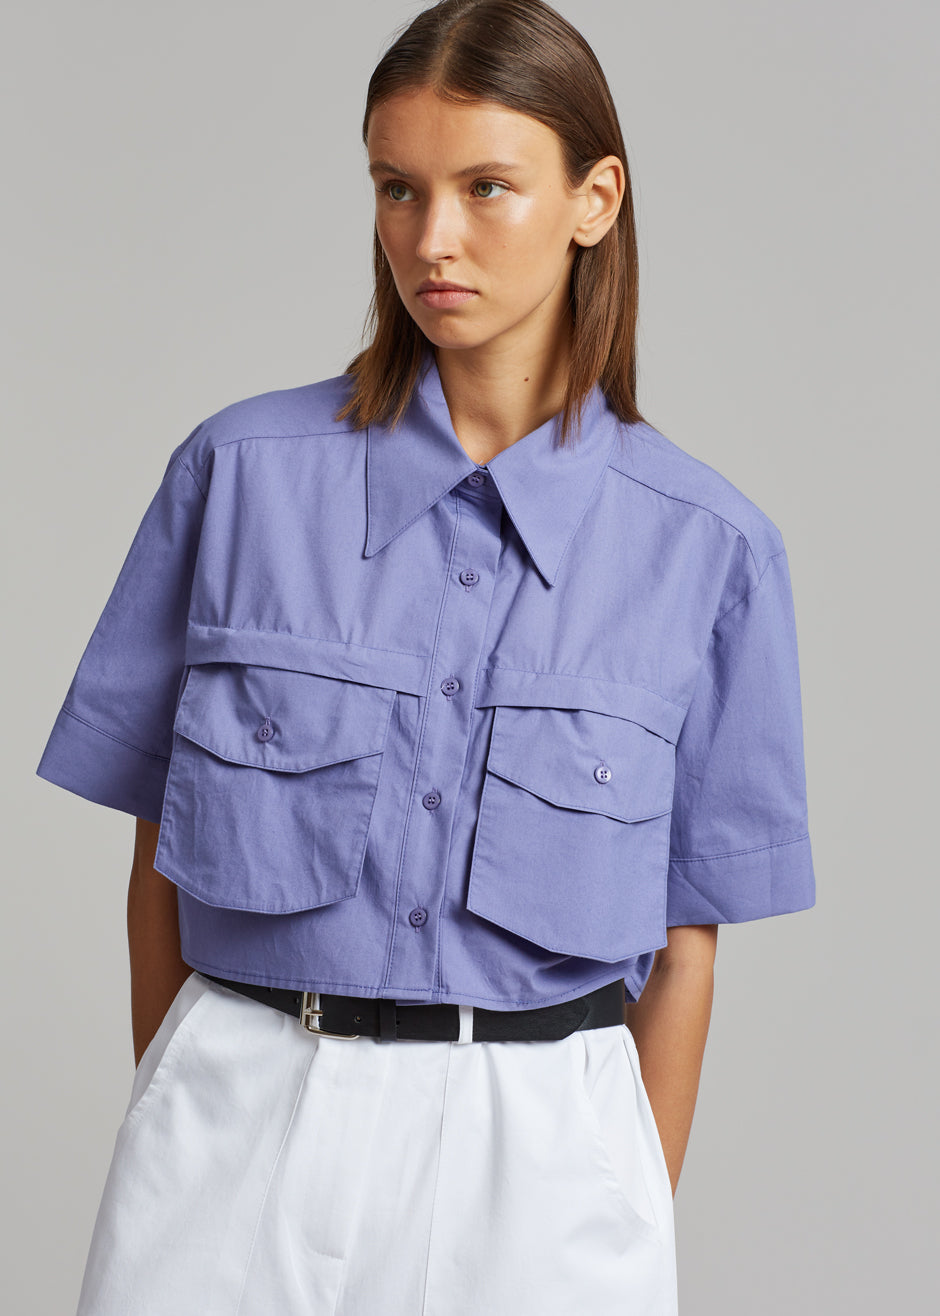 Ada Cropped Pocket Shirt - Purple - 1